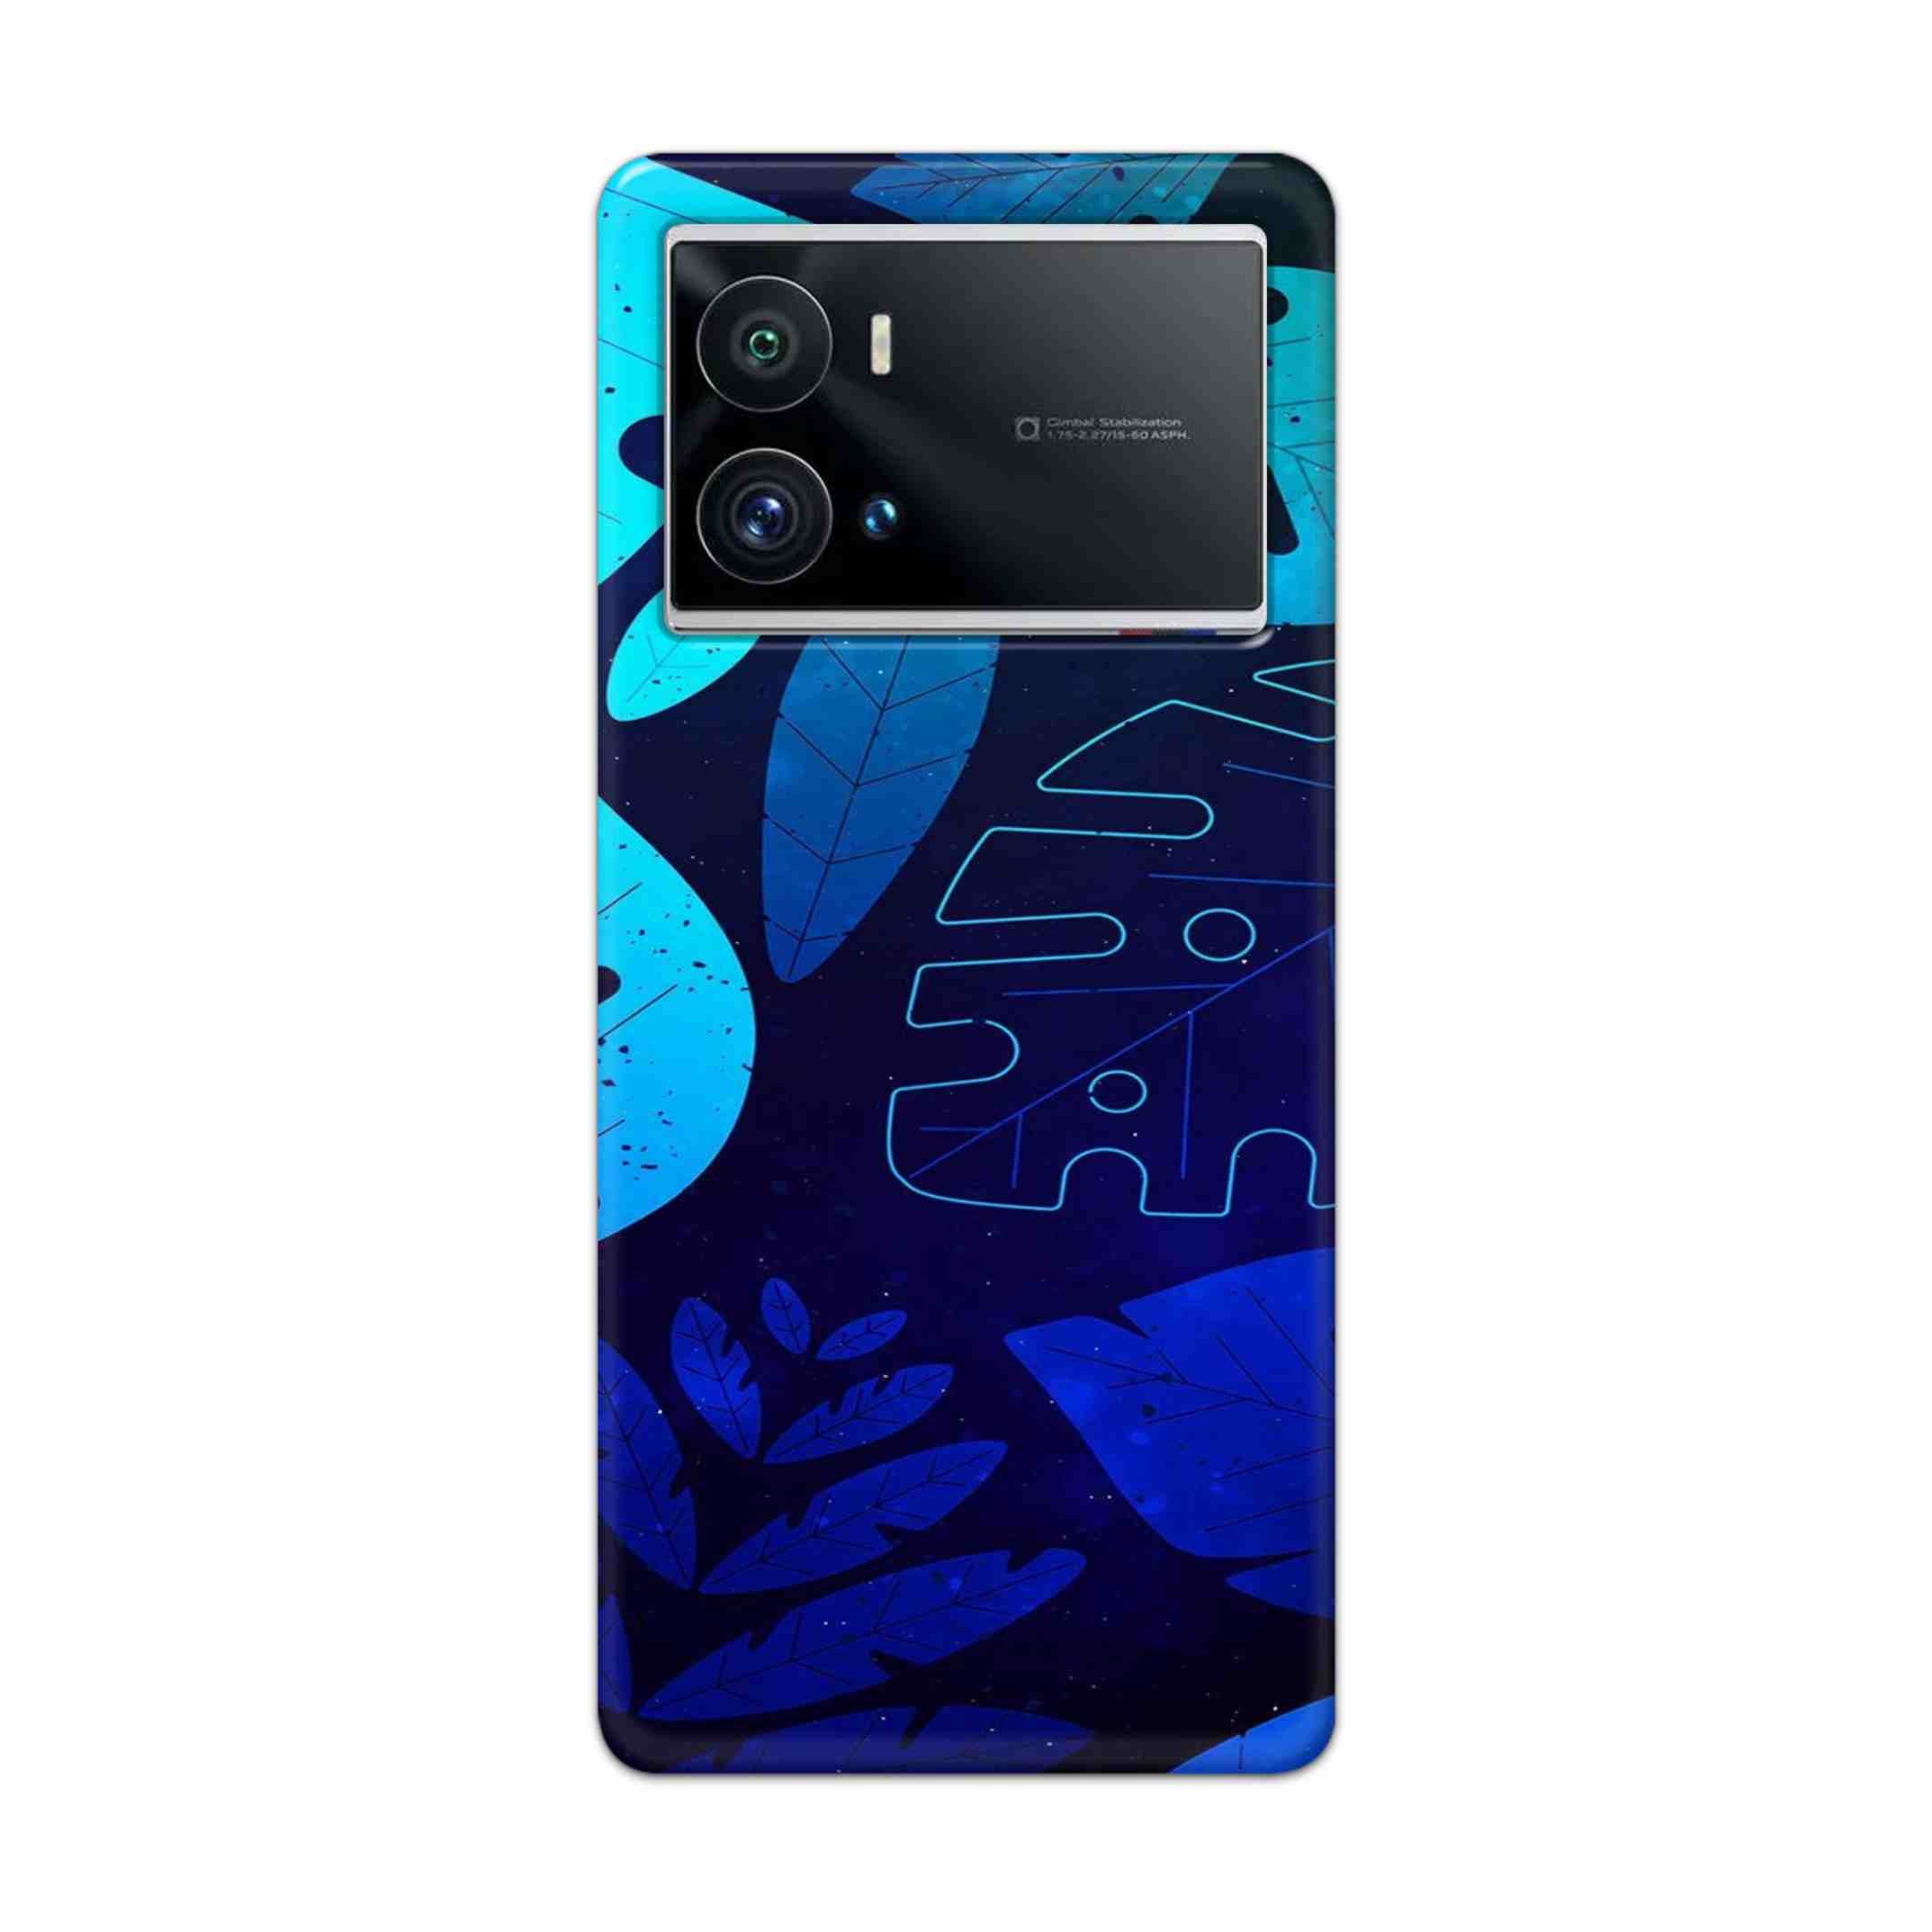 Buy Neon Leaf Hard Back Mobile Phone Case Cover For iQOO 9 Pro 5G Online